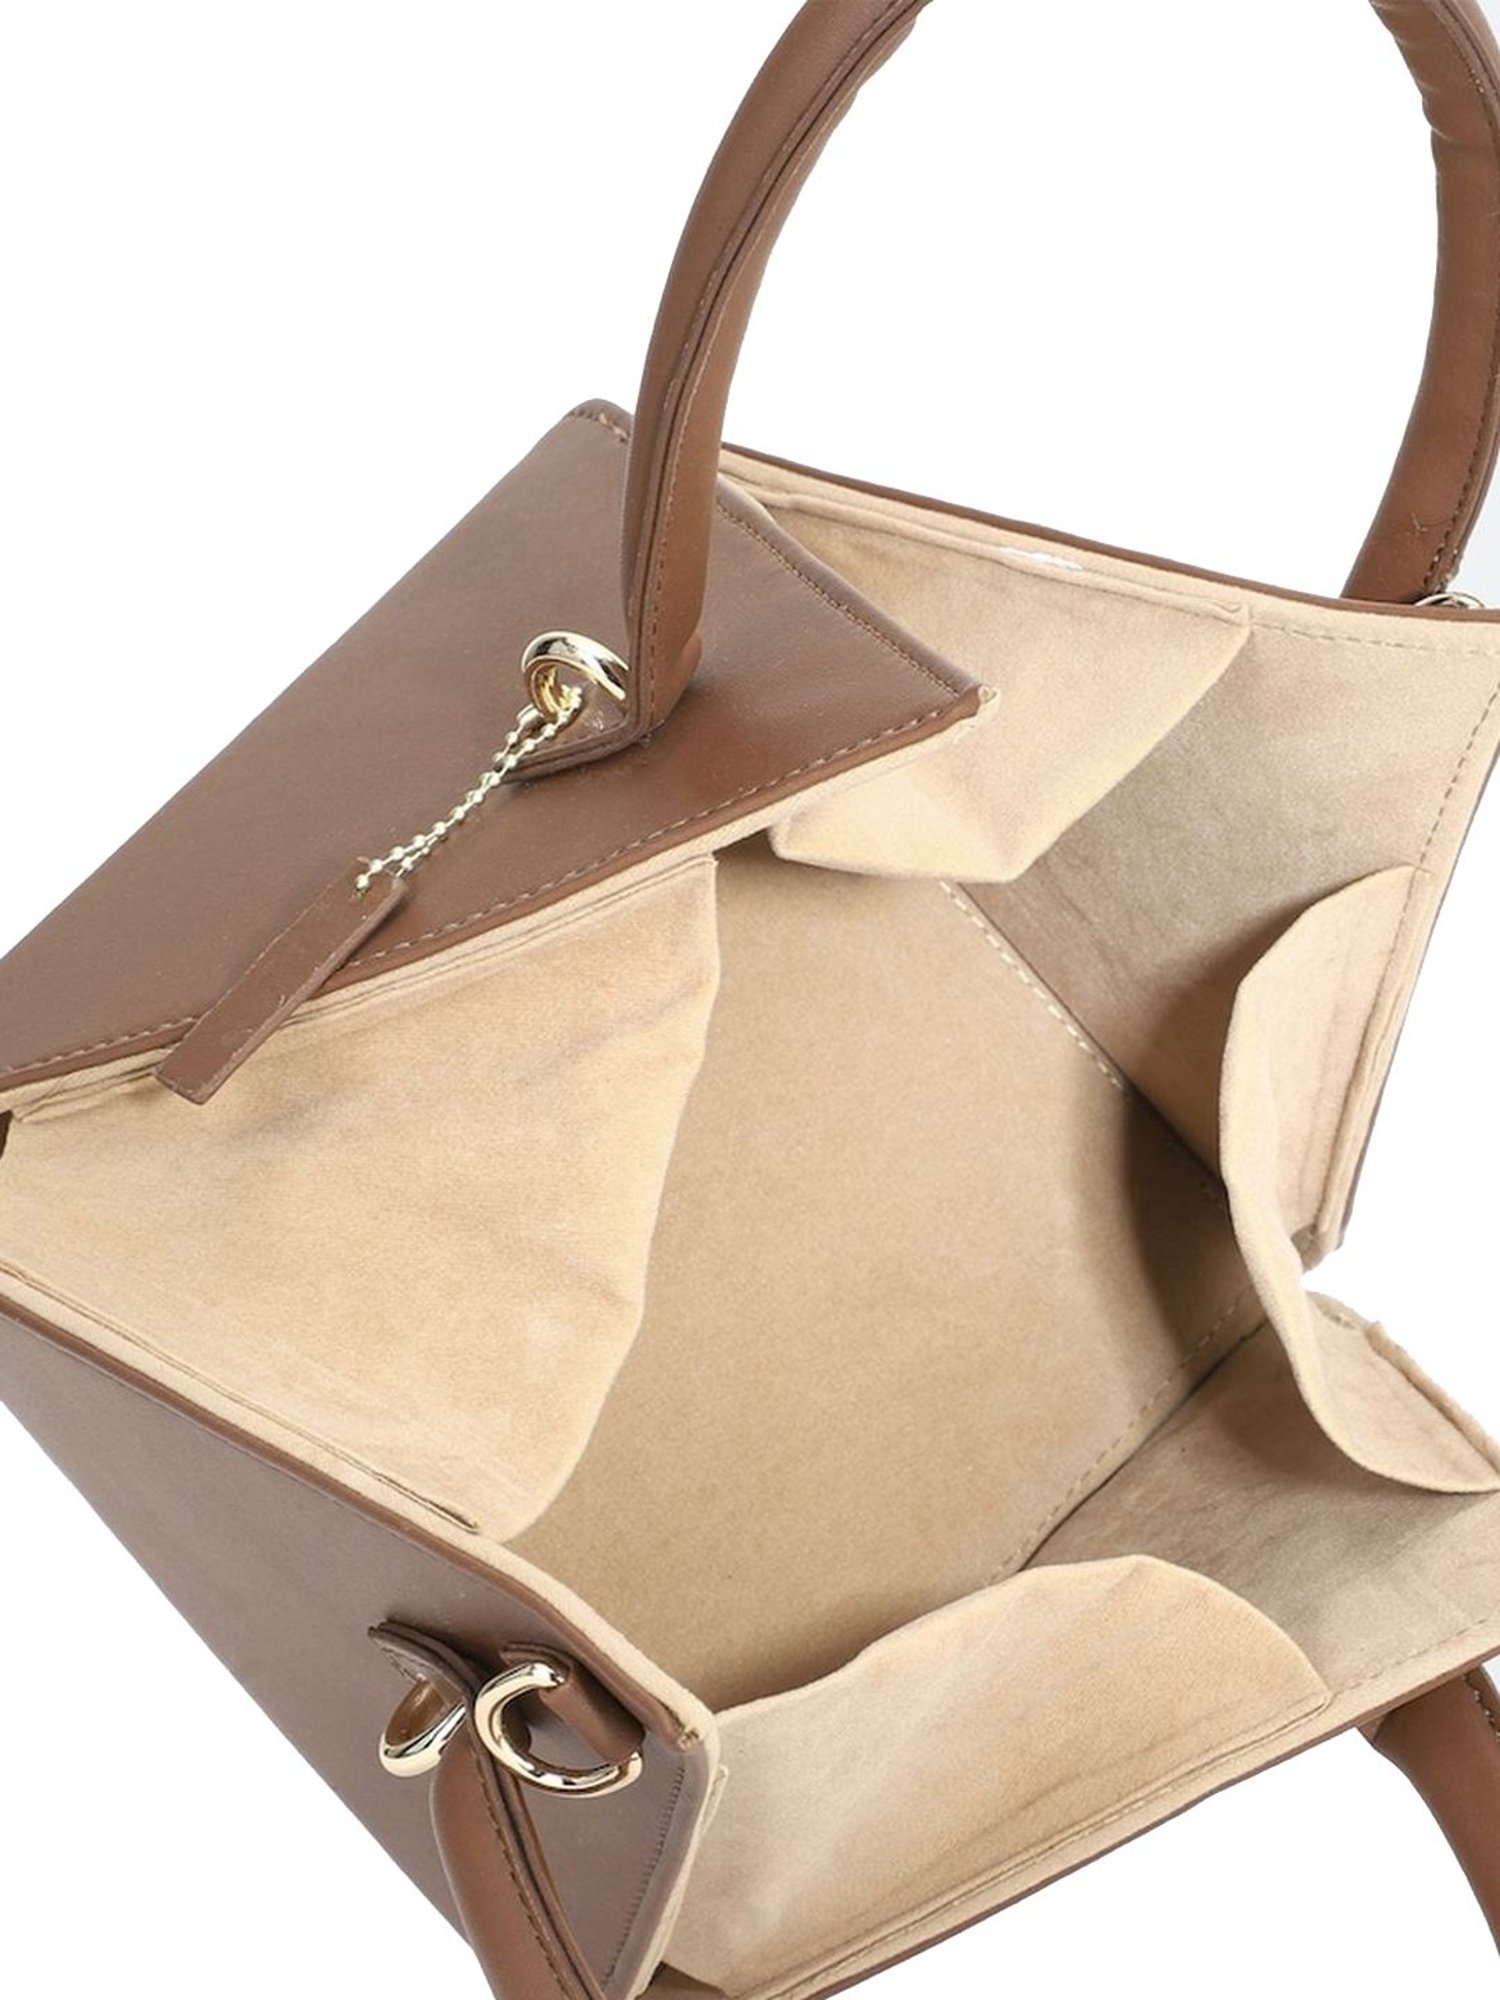 FOXLOVER Genuine Leather Satchel Handbags for Women Fashion Ladies Small  Top-Handle Purse Vintage Crossbody Shoulder Bags: Handbags: Amazon.com